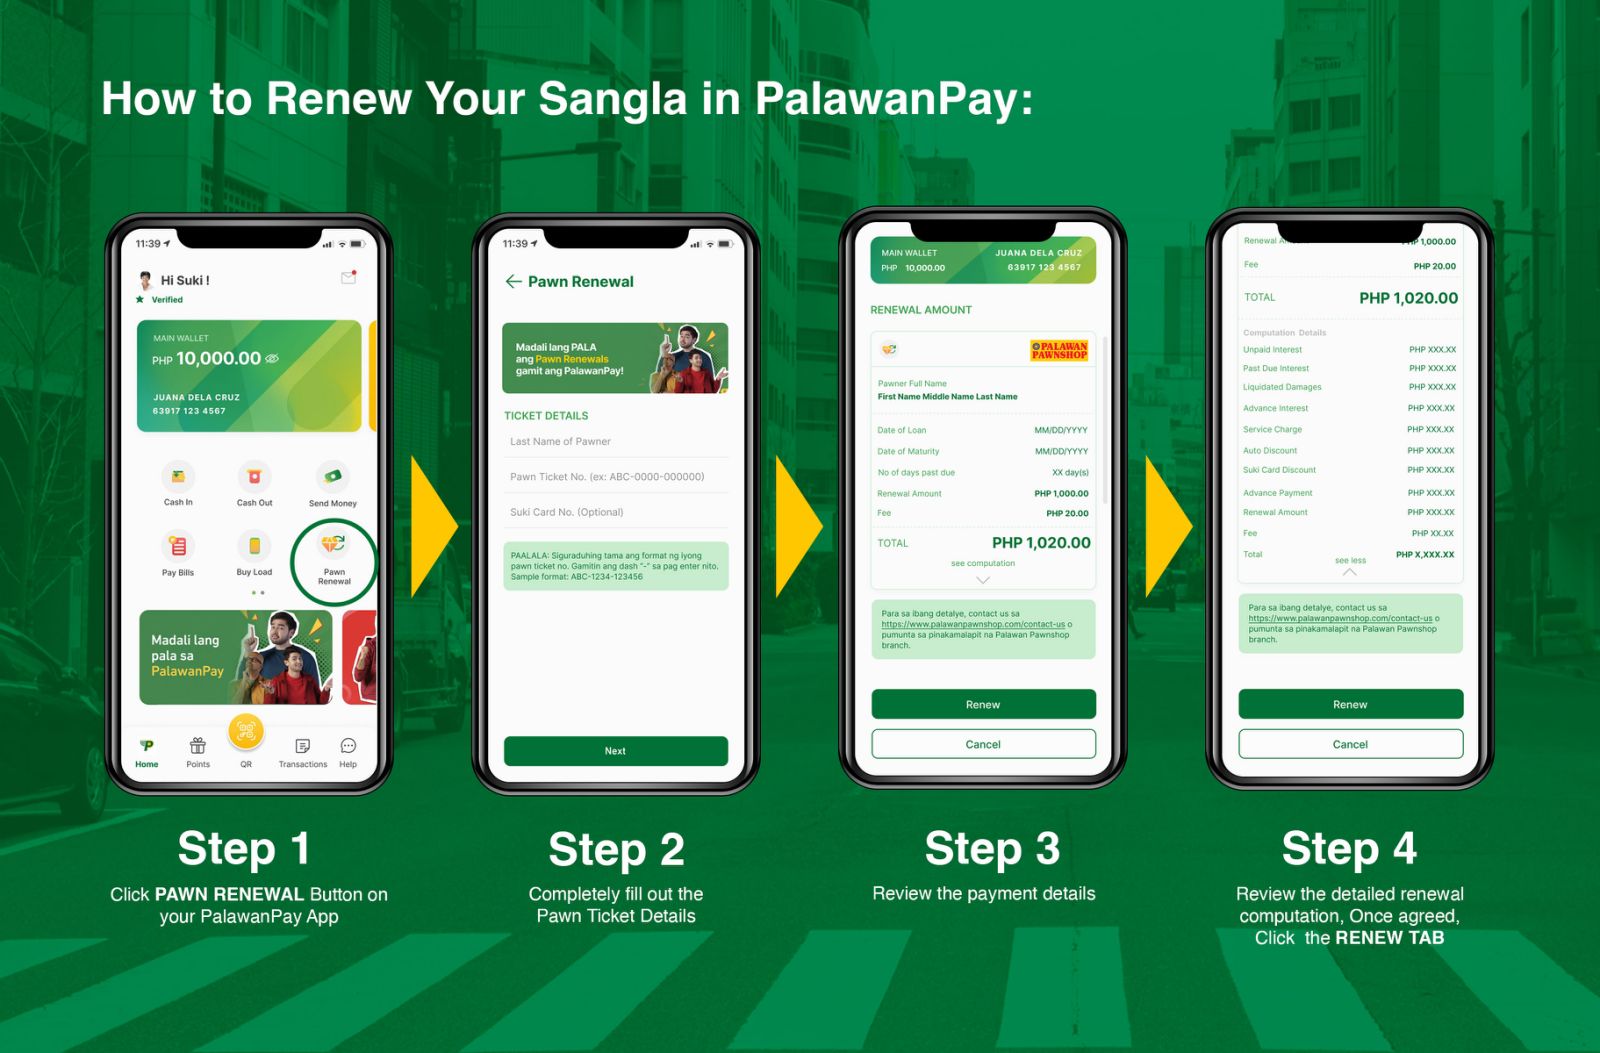 Palawan Pawnshop introduces convenient Online Sangla Renewal